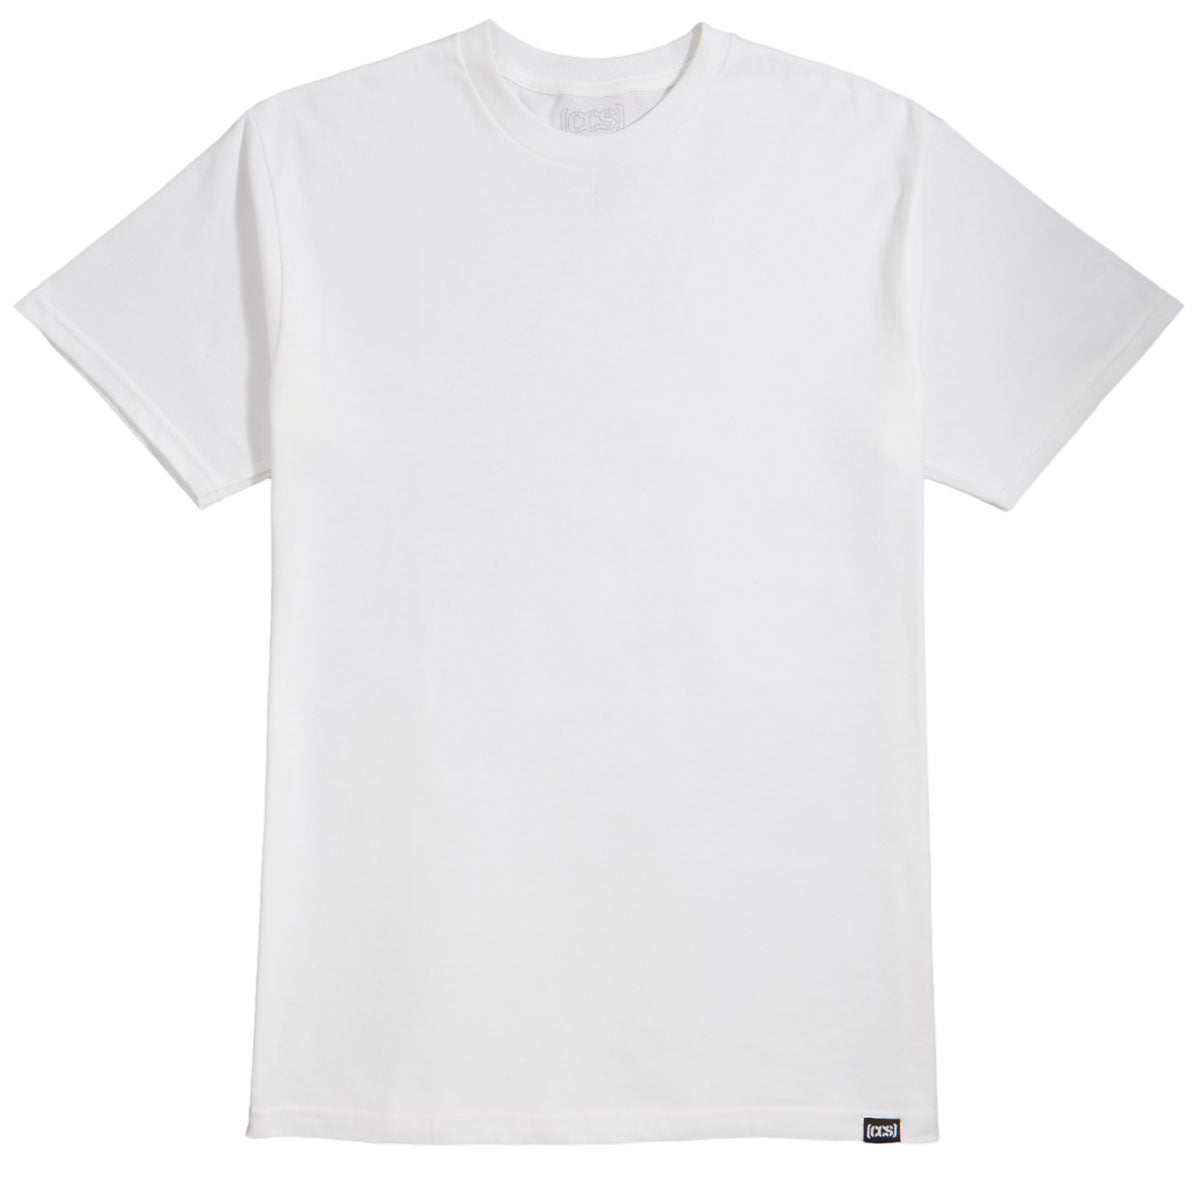 CCS Original Heavyweight T-Shirt - White image 1